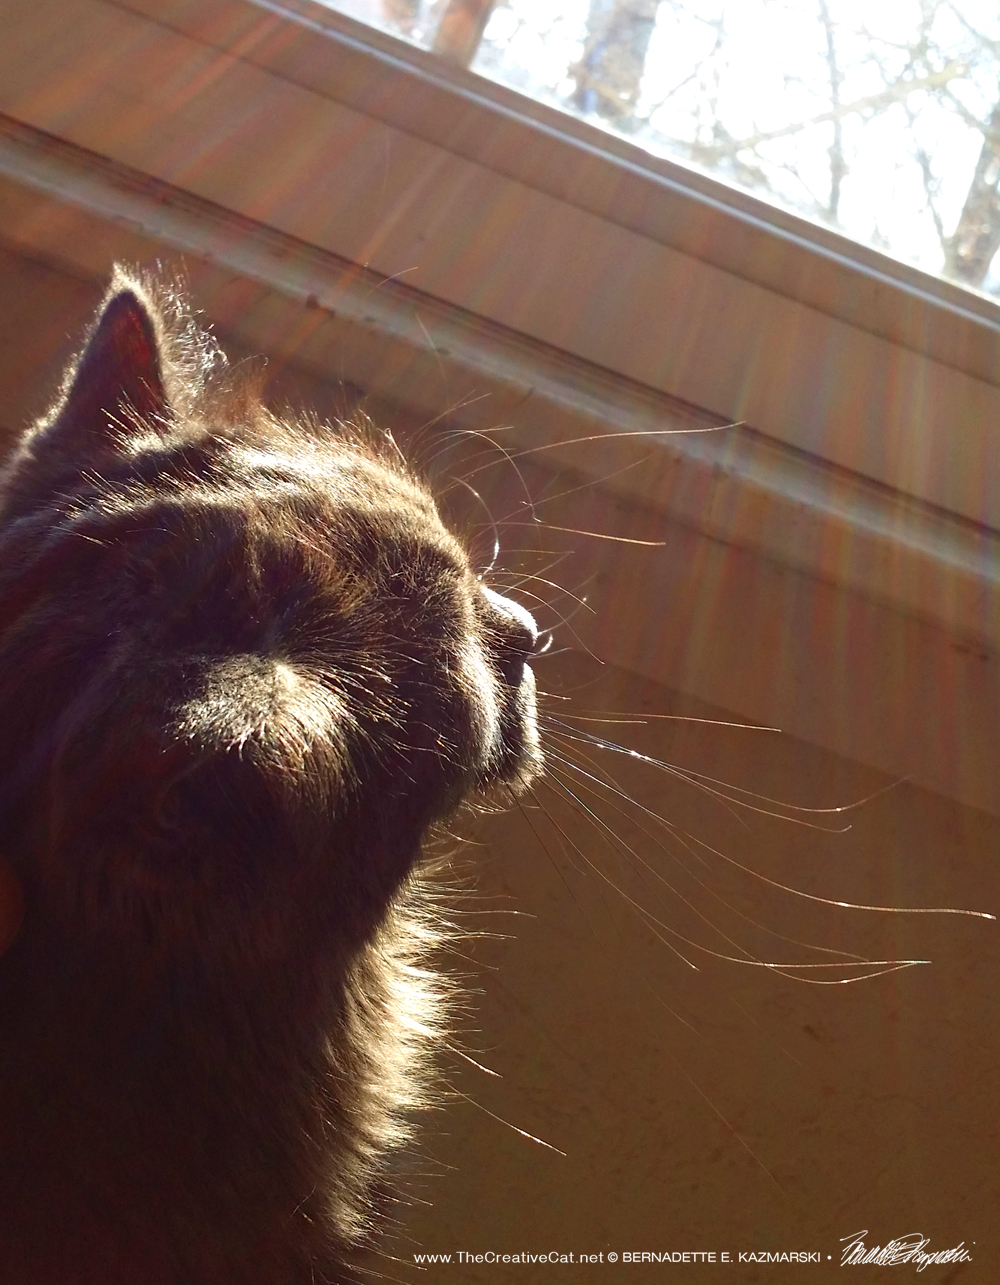 Ophelia enjoying the sun this morning.